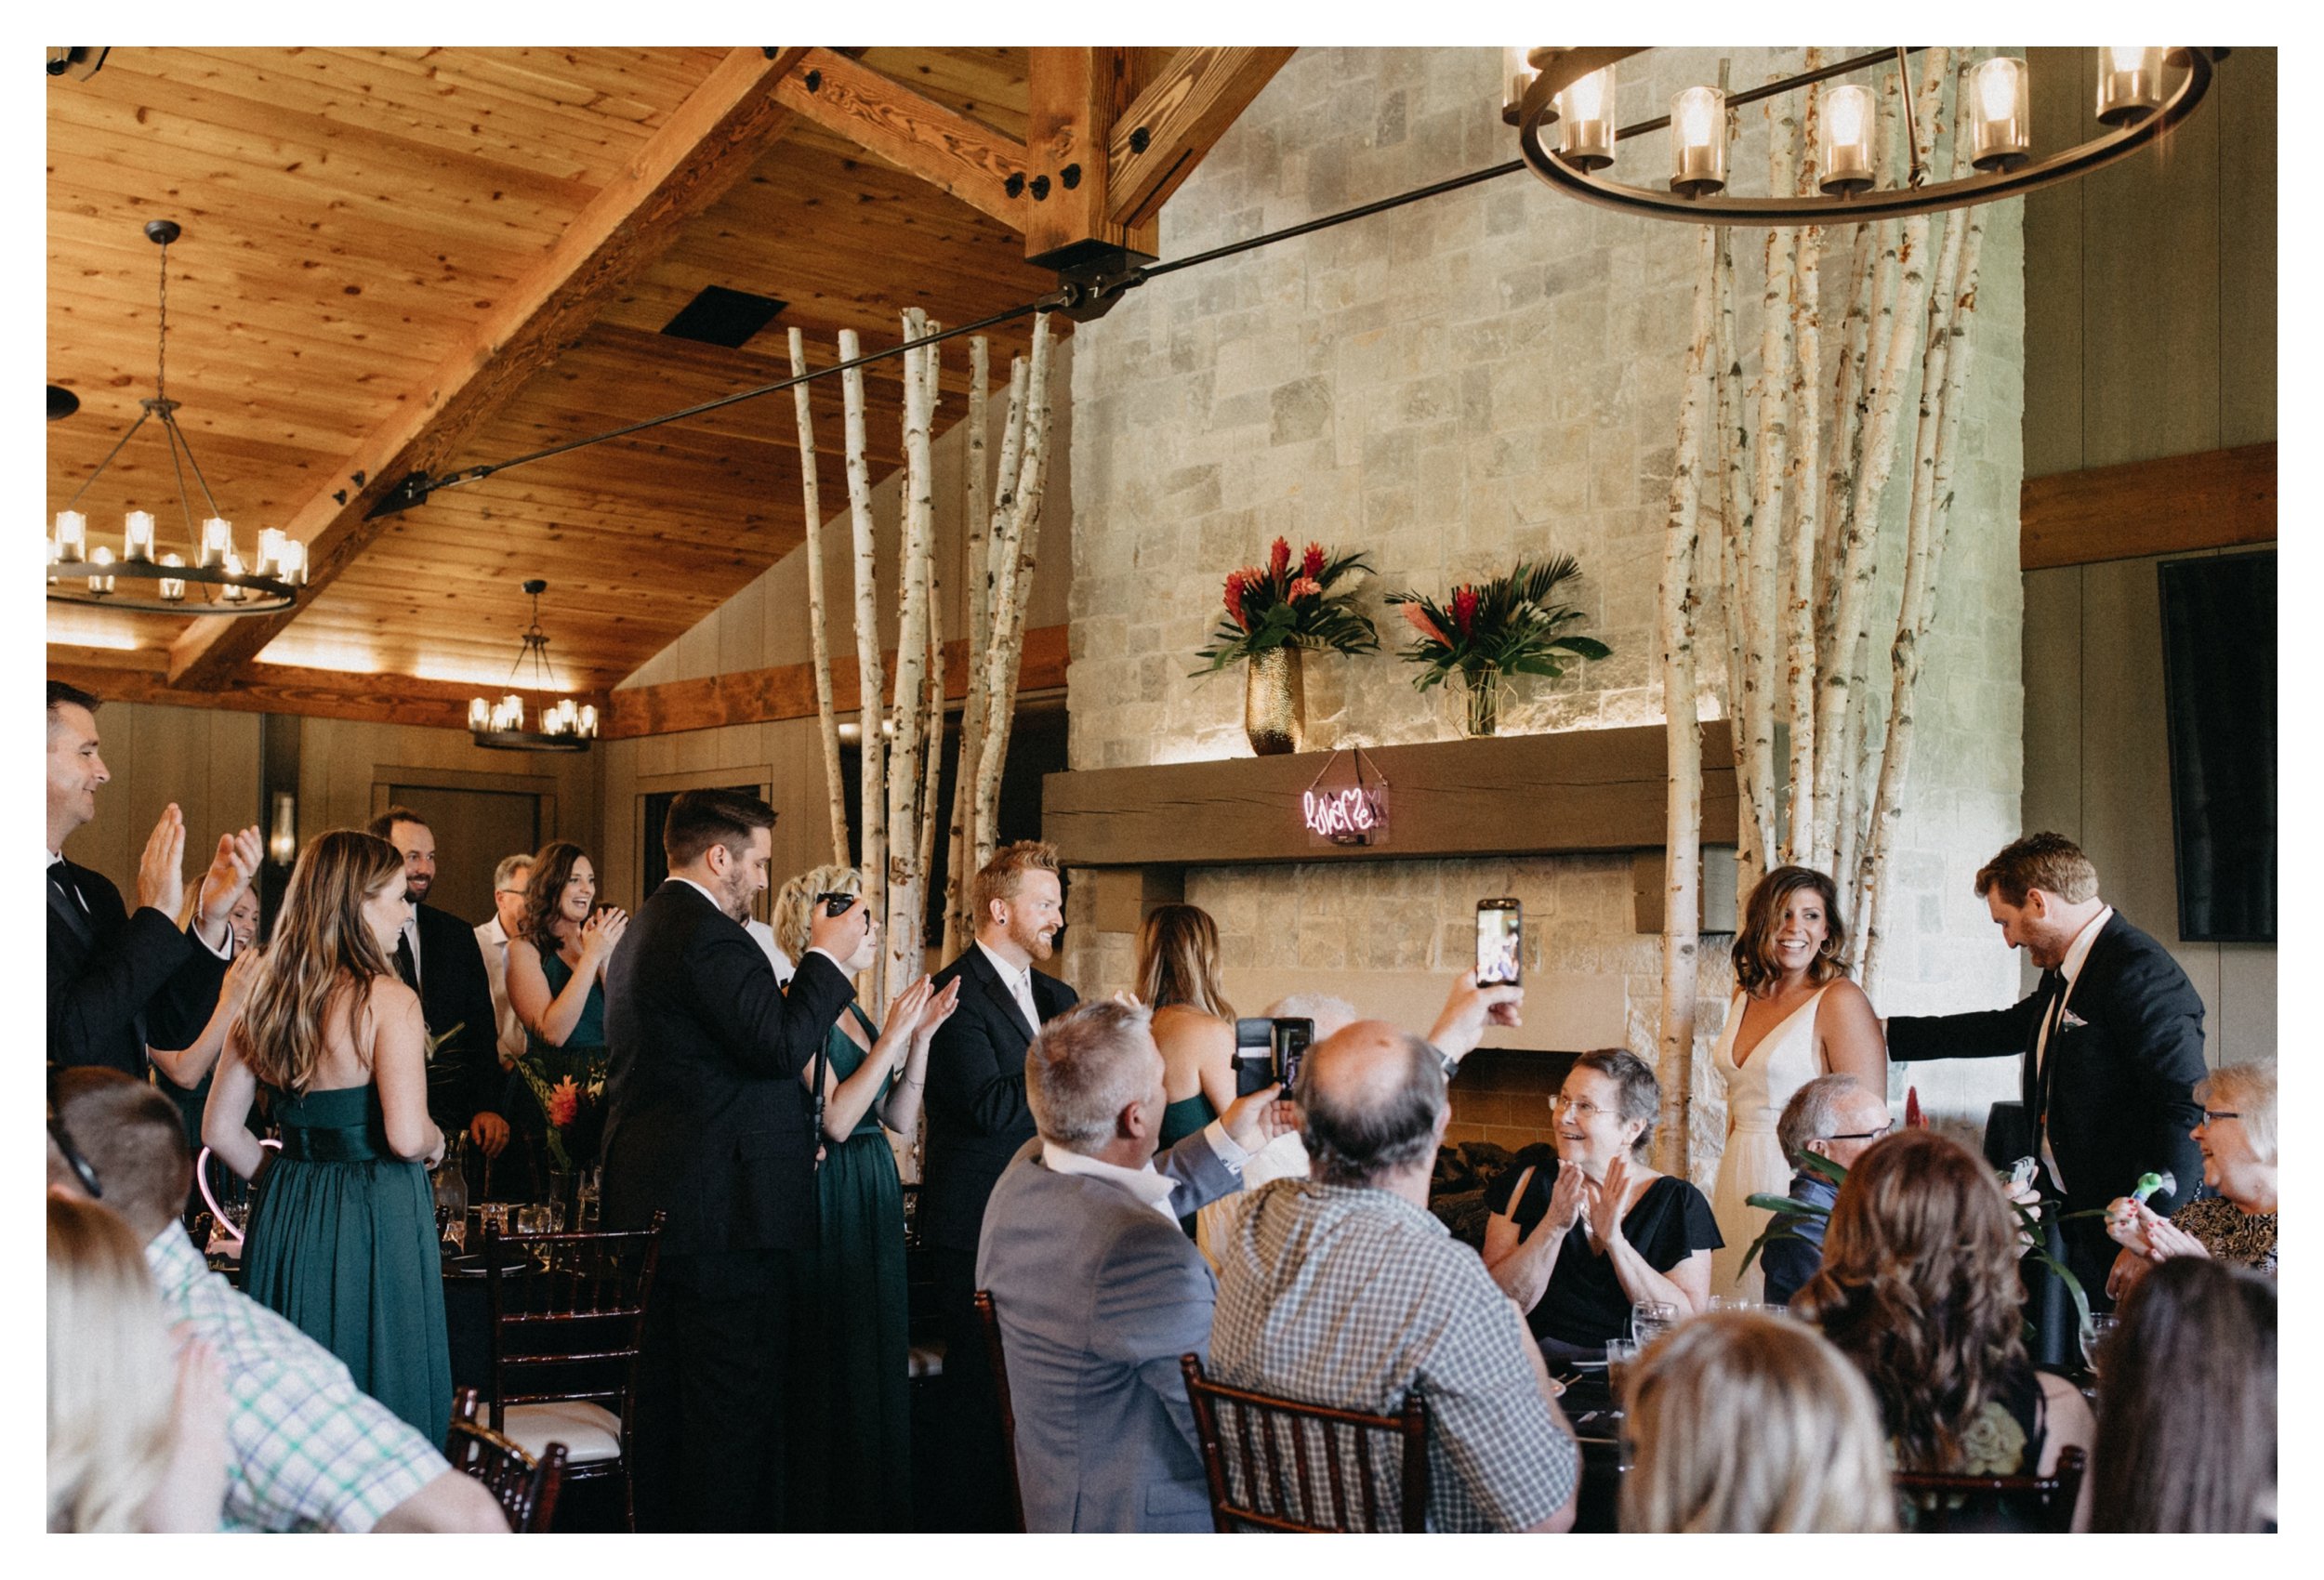 Bride and groom walking into reception as guests cheer at 7 vines vineyard wedding venue